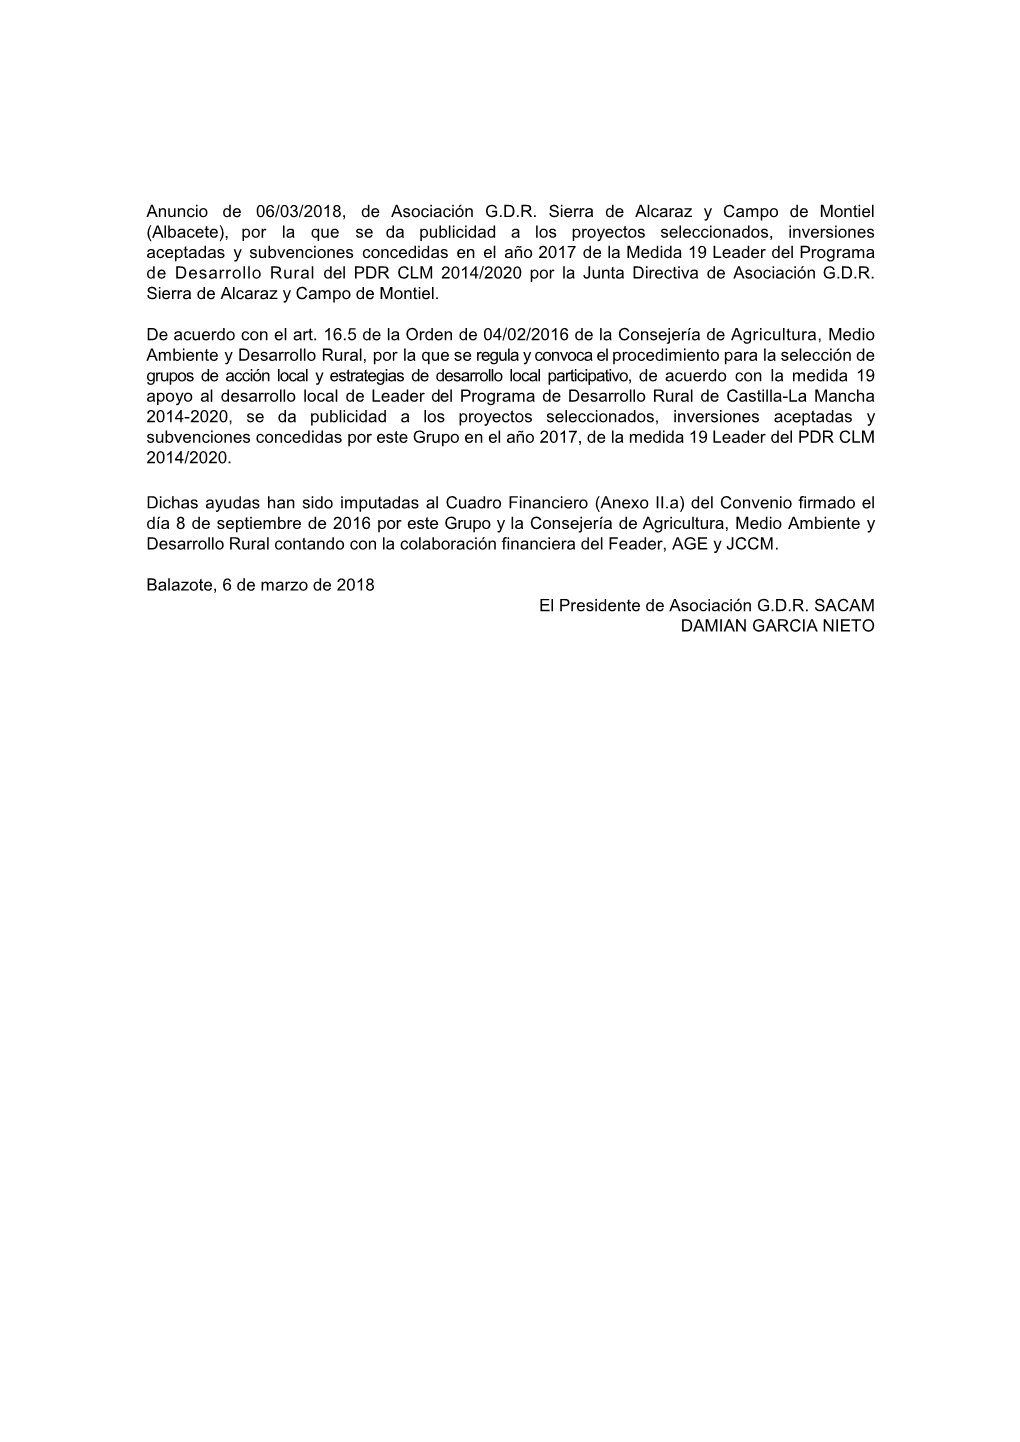 Anuncio De 06/03/2018, De Asociación G.D.R. Sierra De